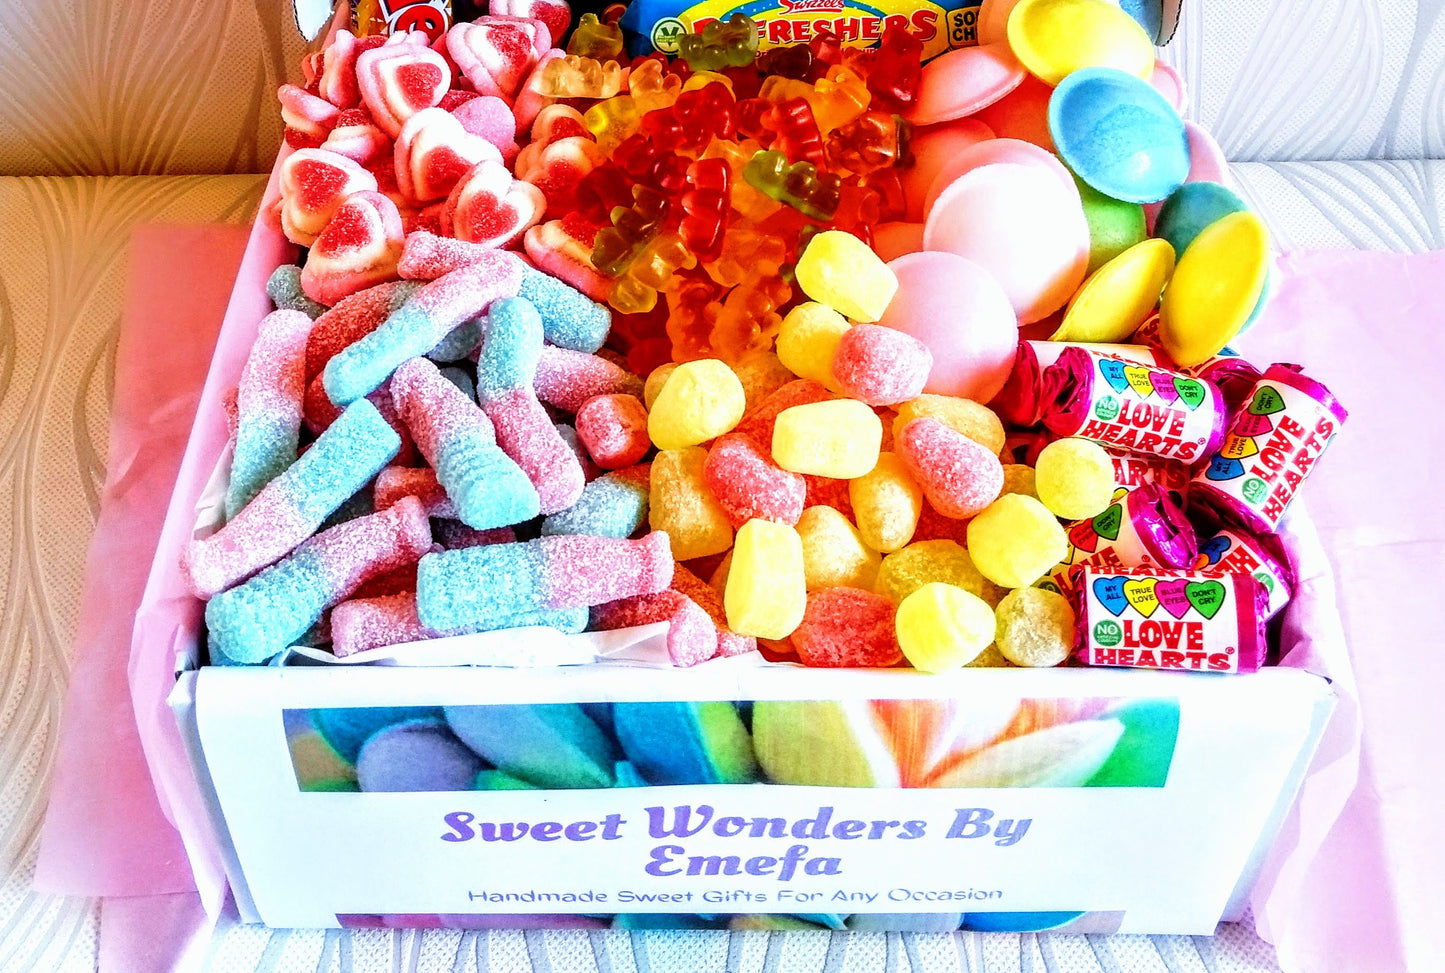 Premium Retro Sweet Box by emefa in UK